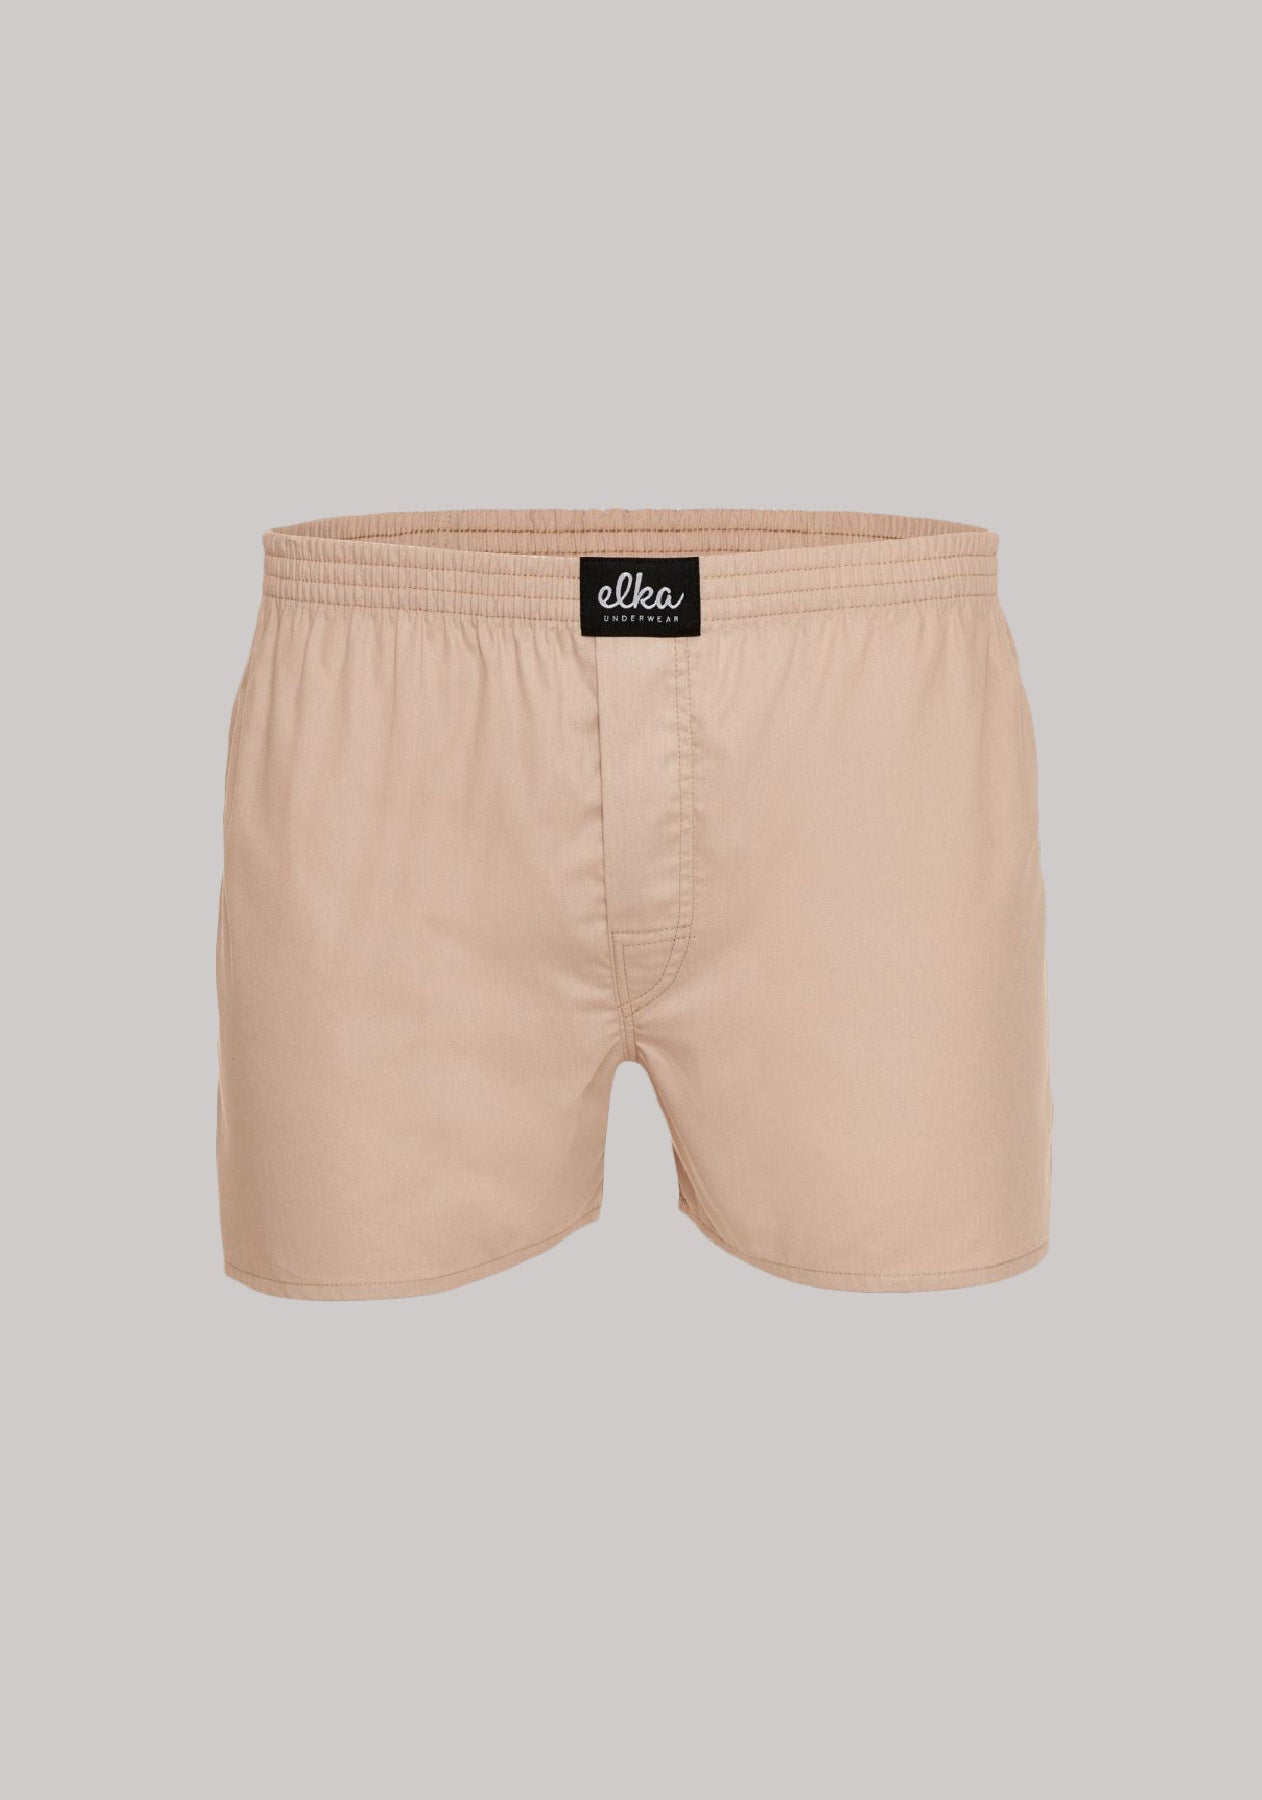 Men's shorts Beige